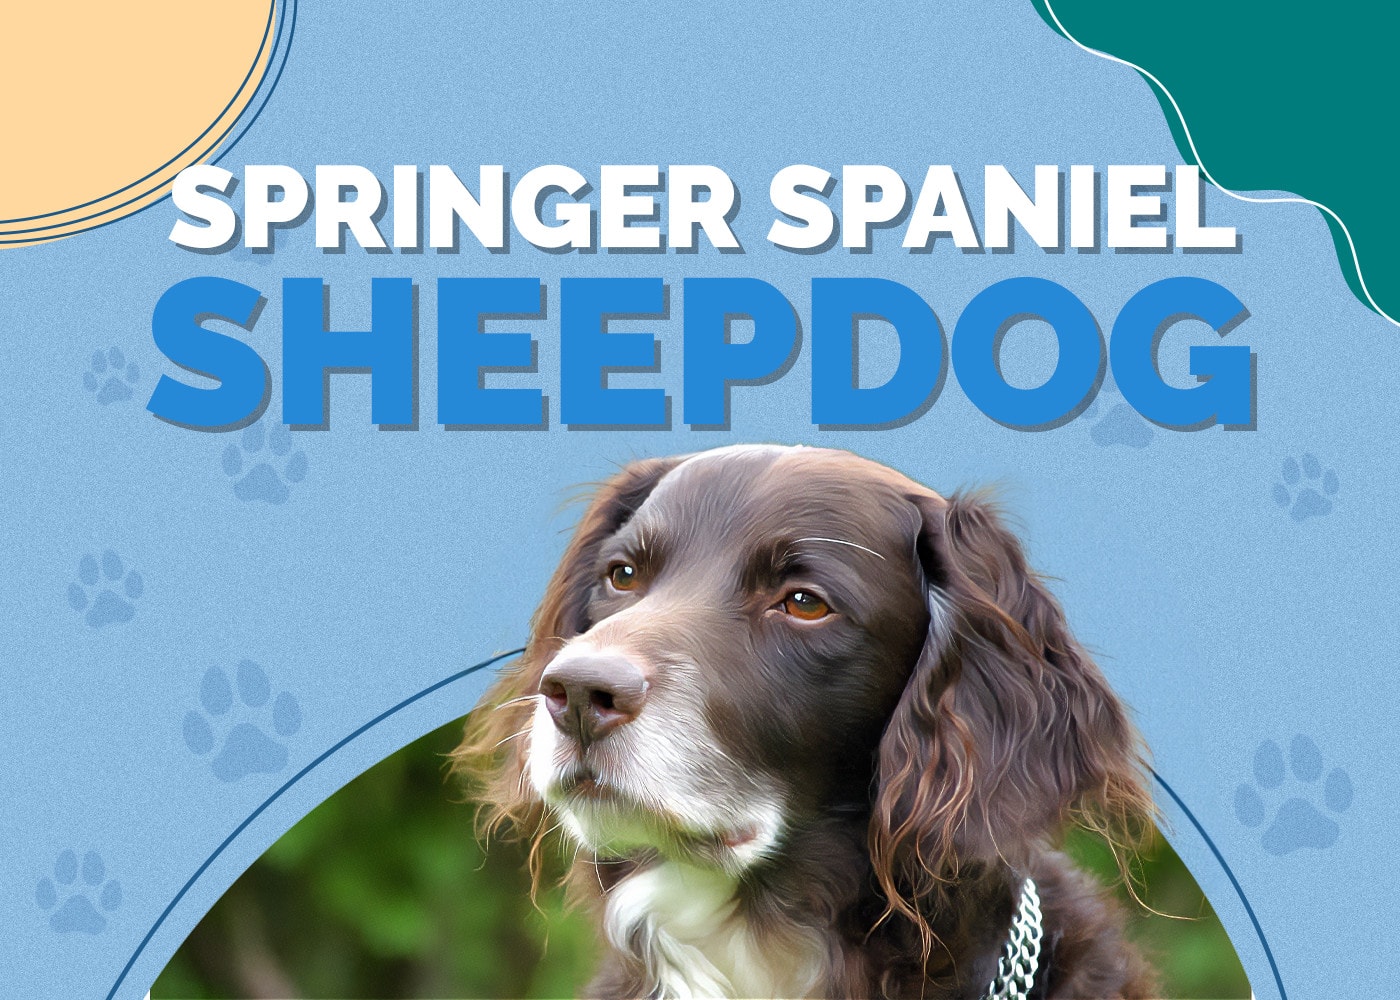 Springer Spaniel Sheepdog